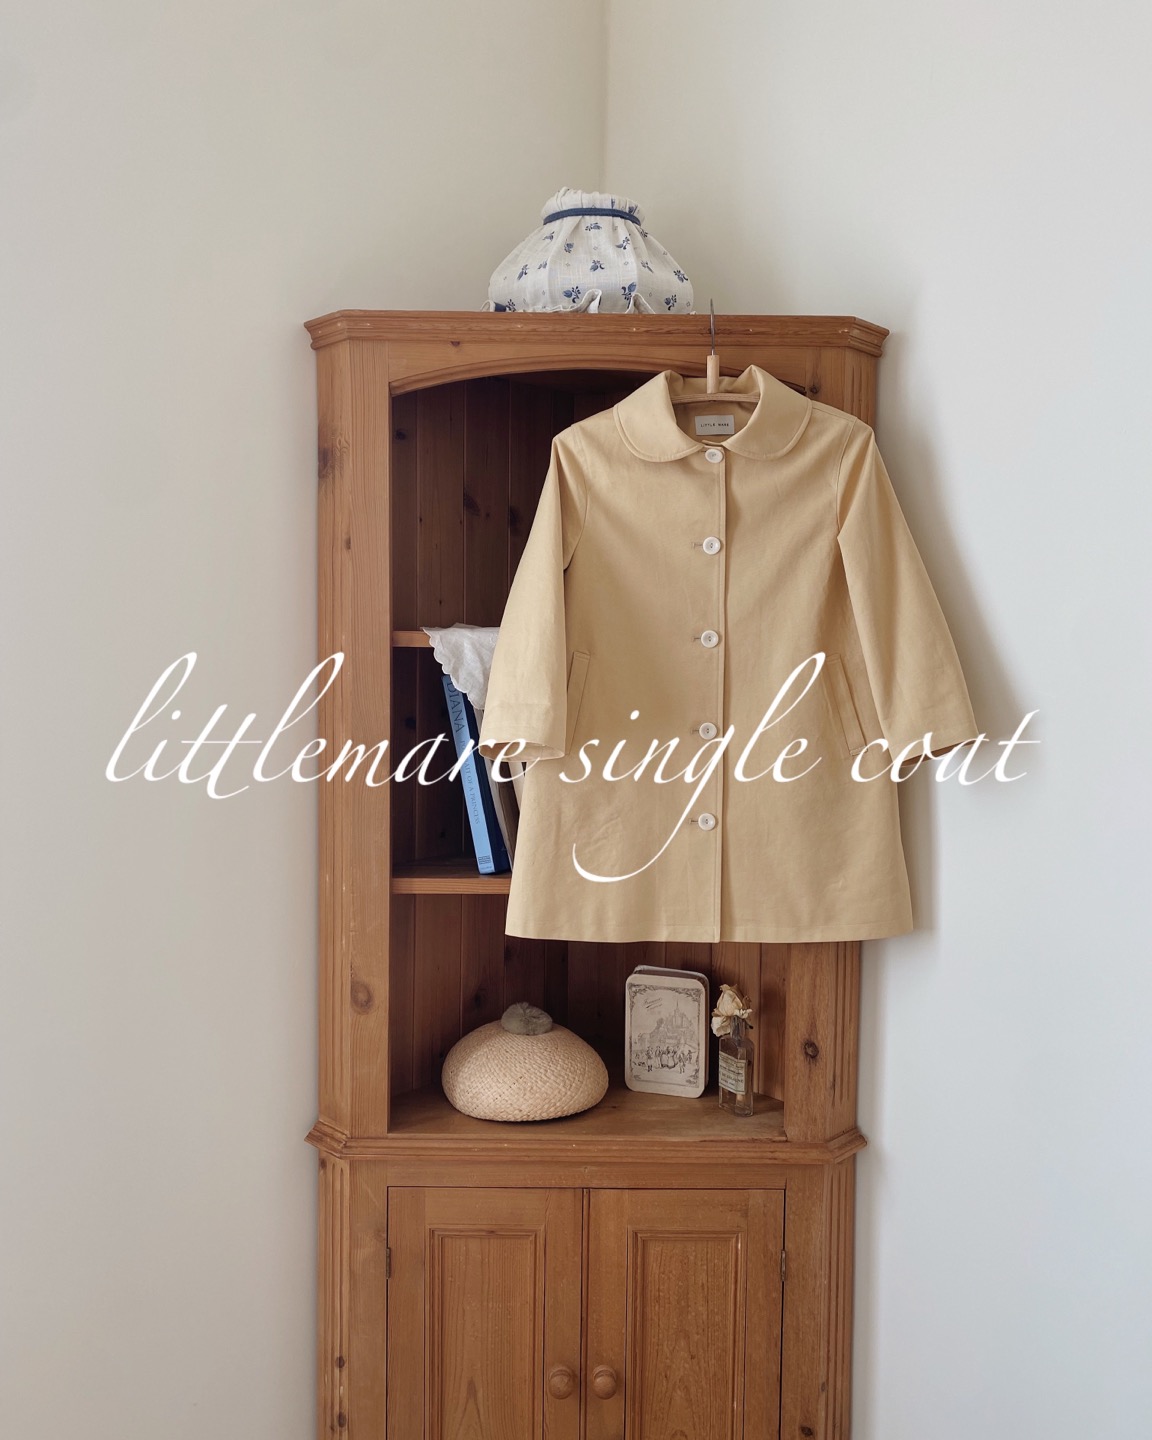 littlemare single coat